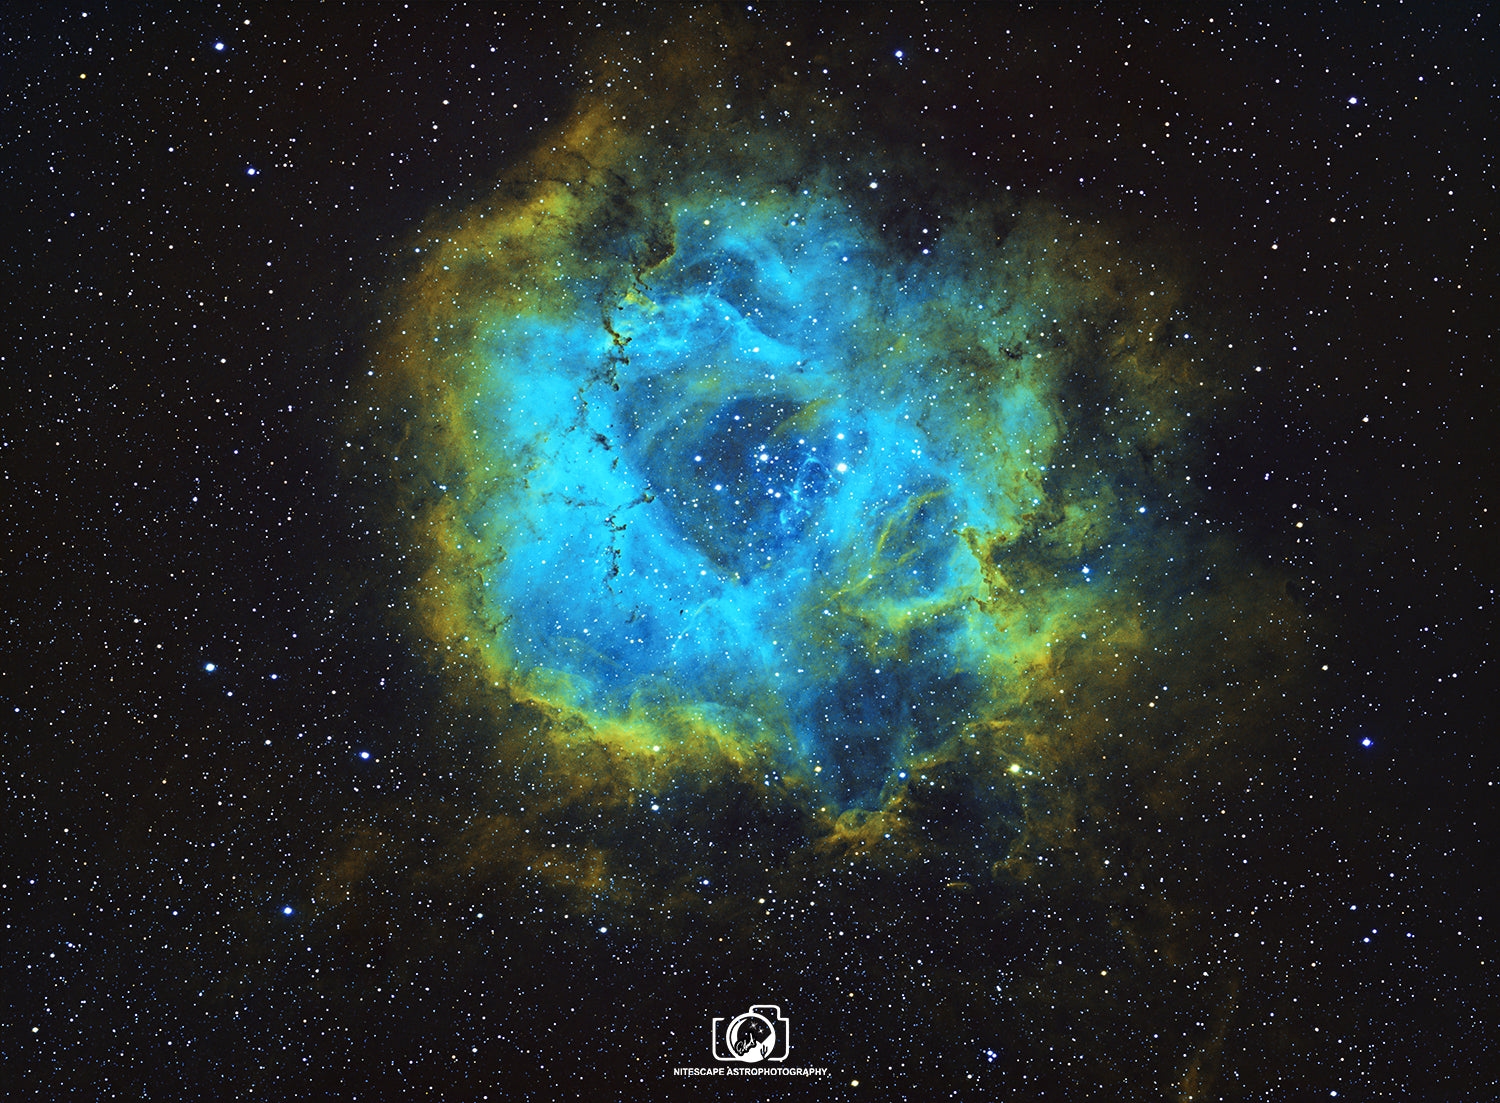 Processing Video for Narrowband Image of Rosette Nebula